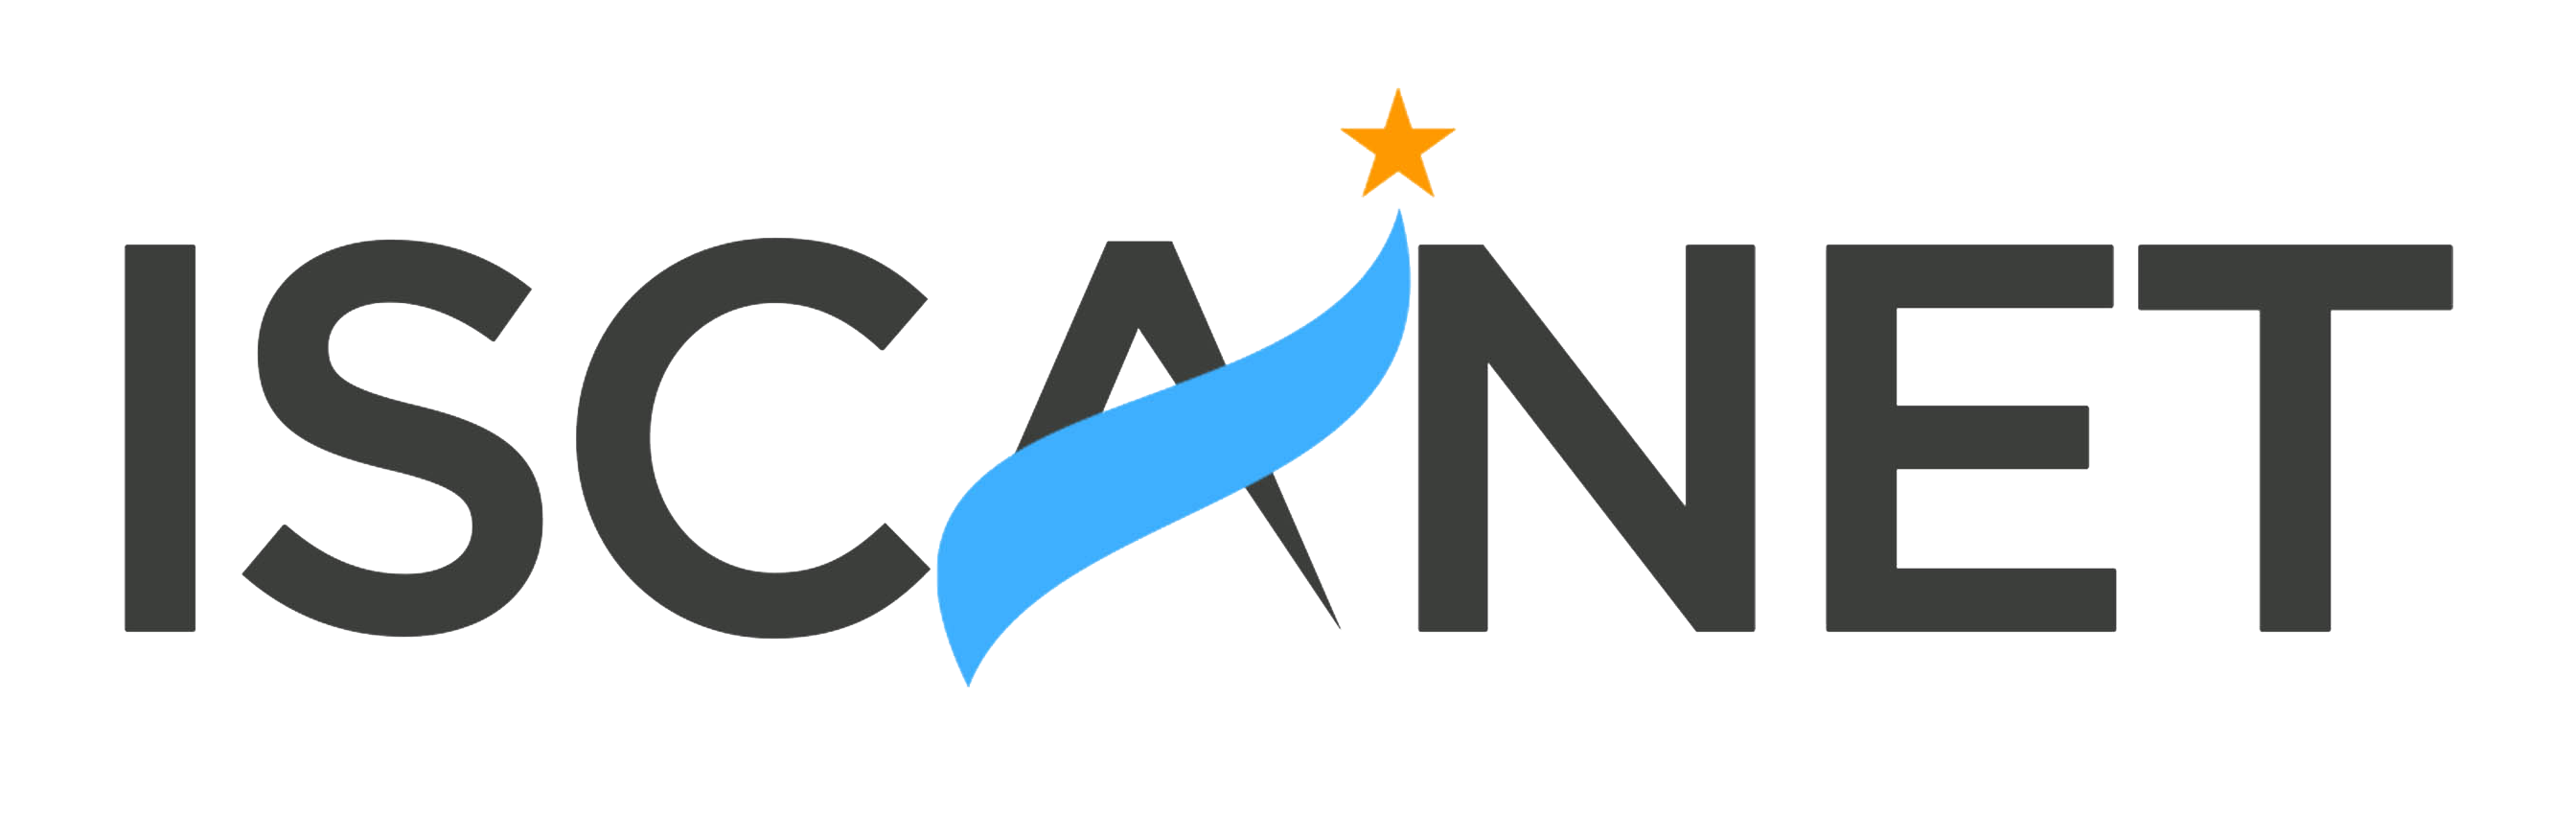 iscanet logo